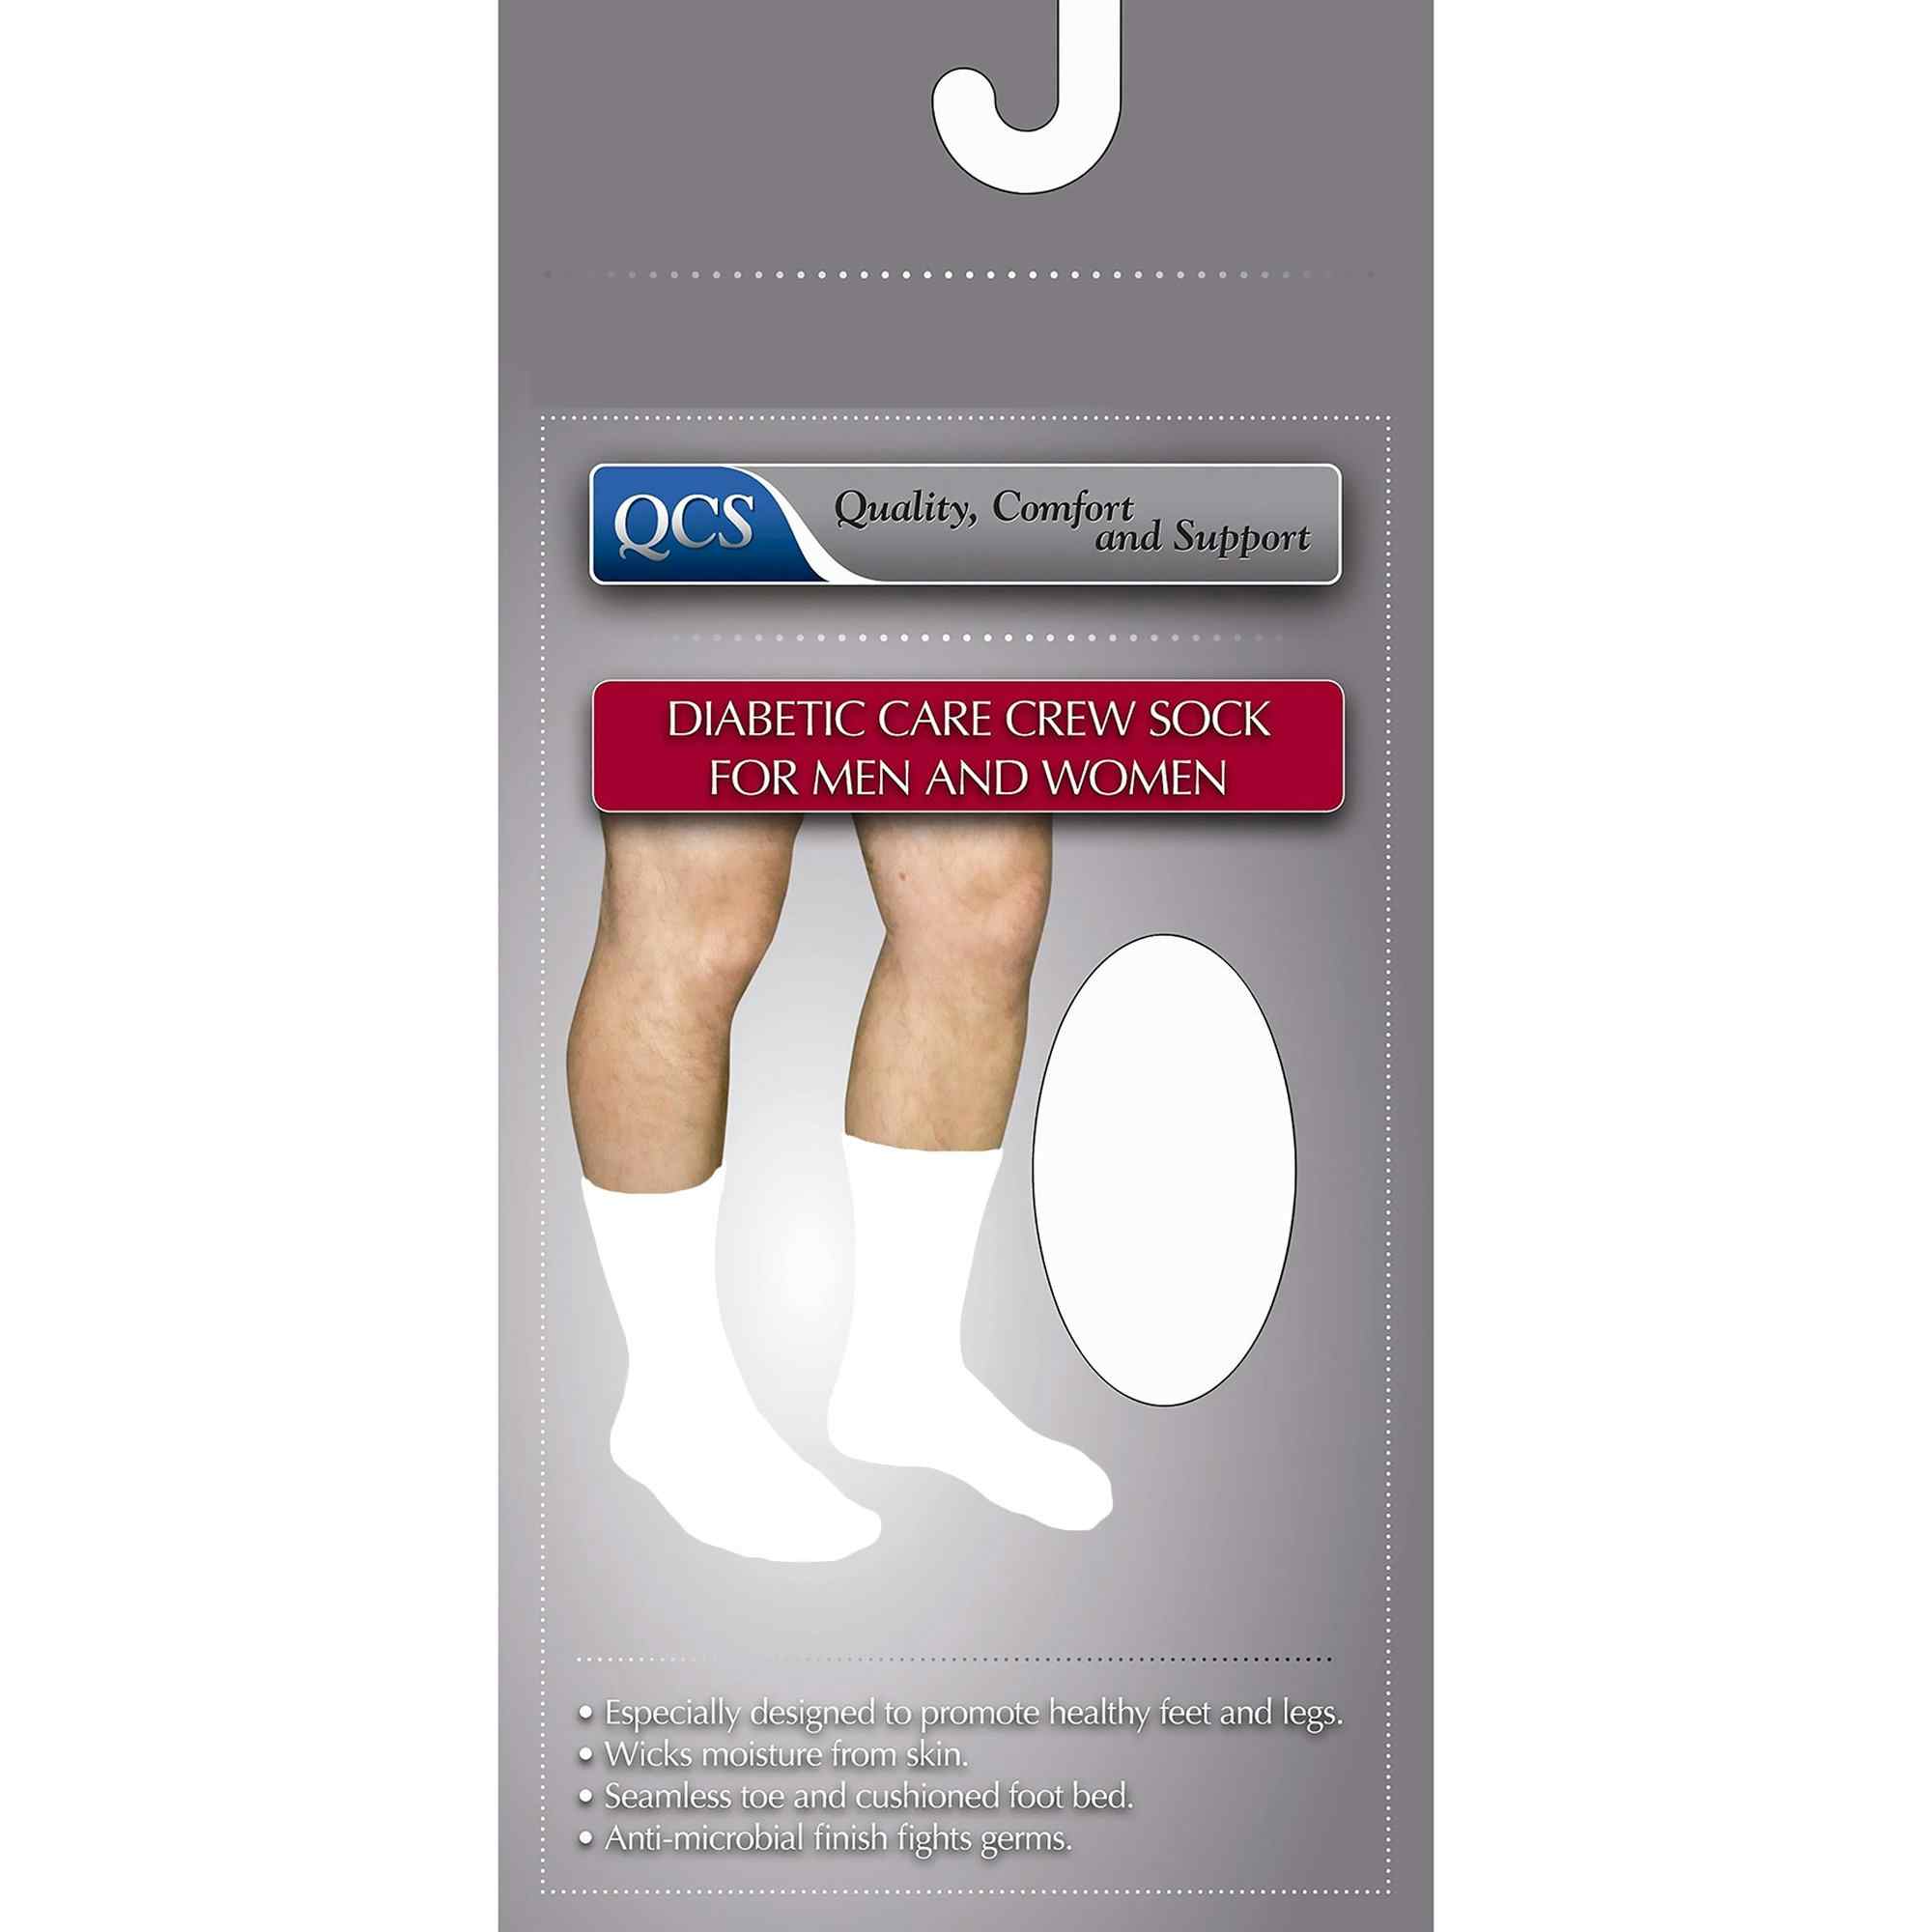 QCS Diabetic Care Crew Sock for Men and Women, White, MCO1680WHILG, Large